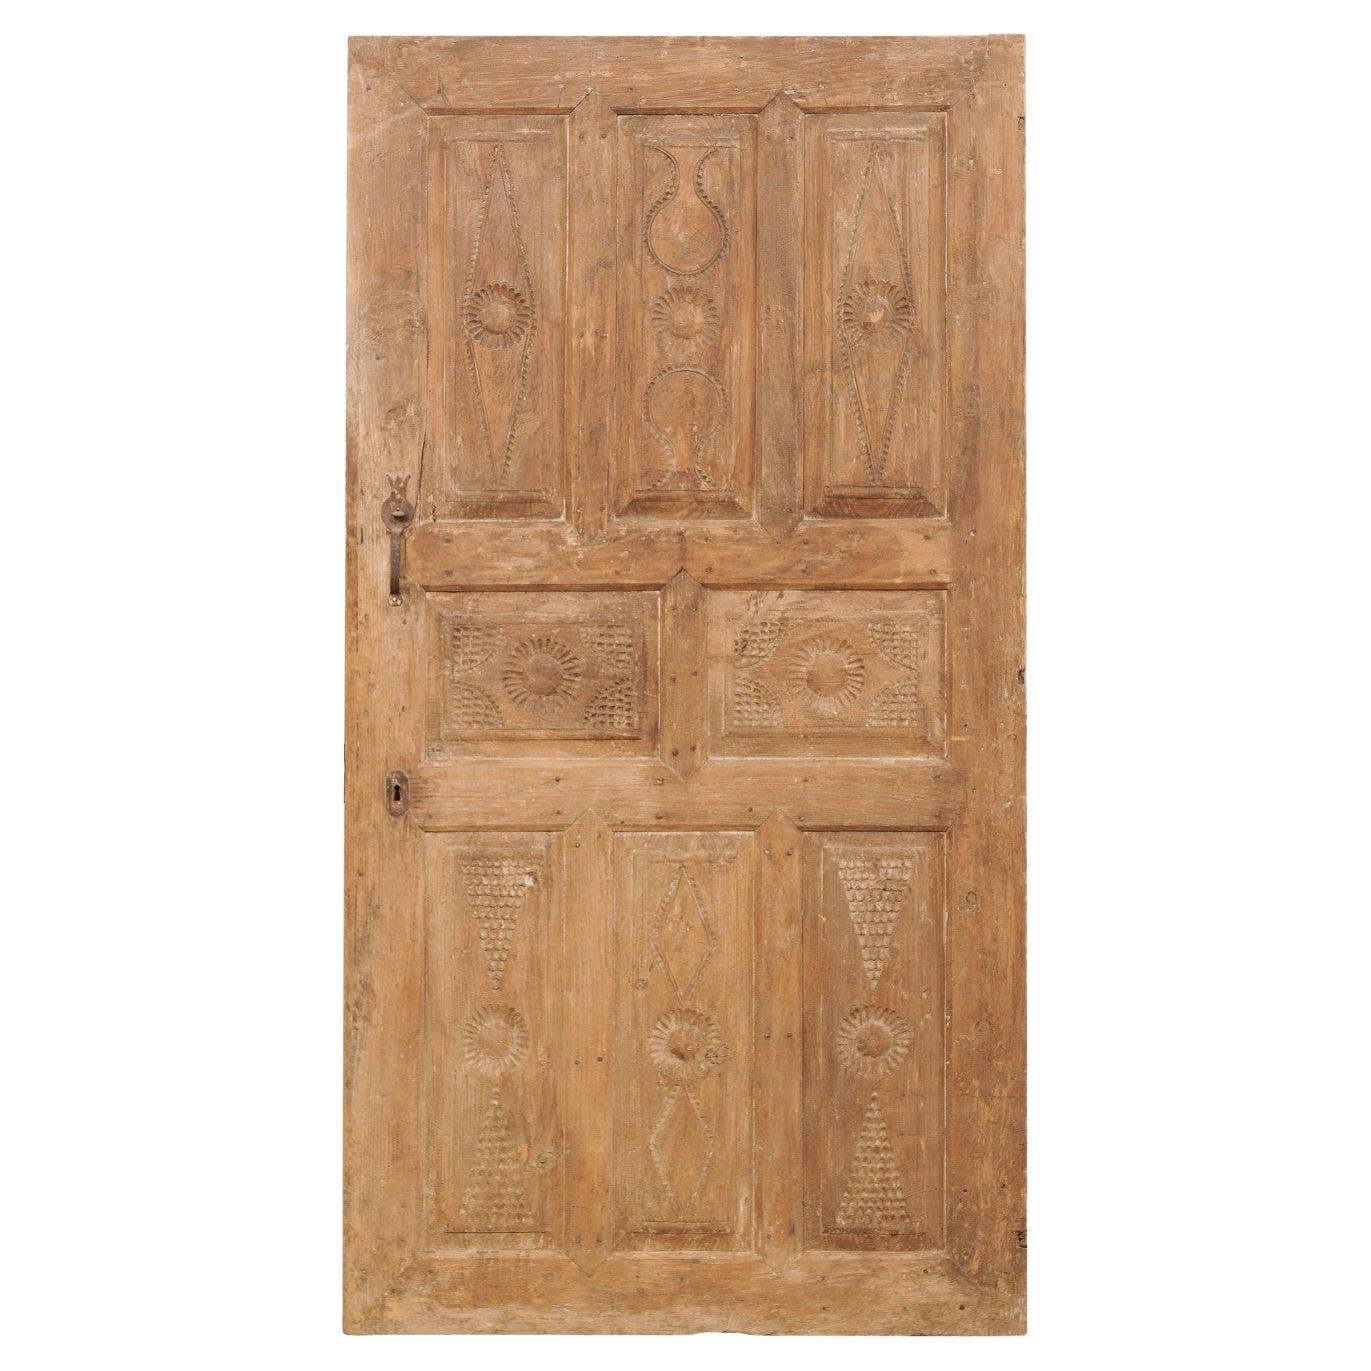 19th C. Turkish Decoratively-Carved Wood Raised Panel Dooor